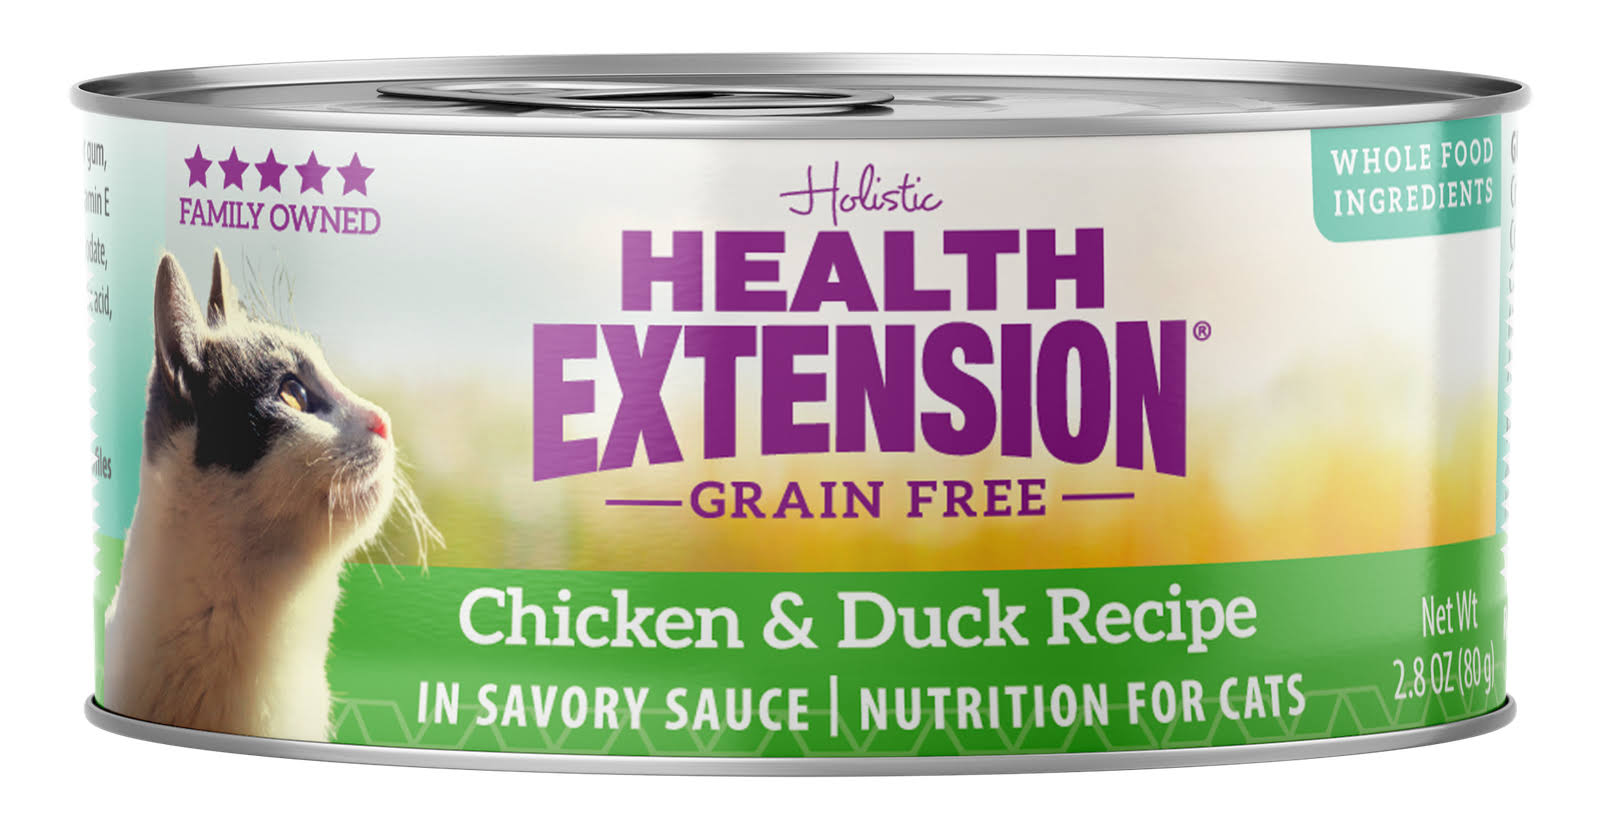 Health Extension Grain Free Cat Food - Chicken & Duck Recipe